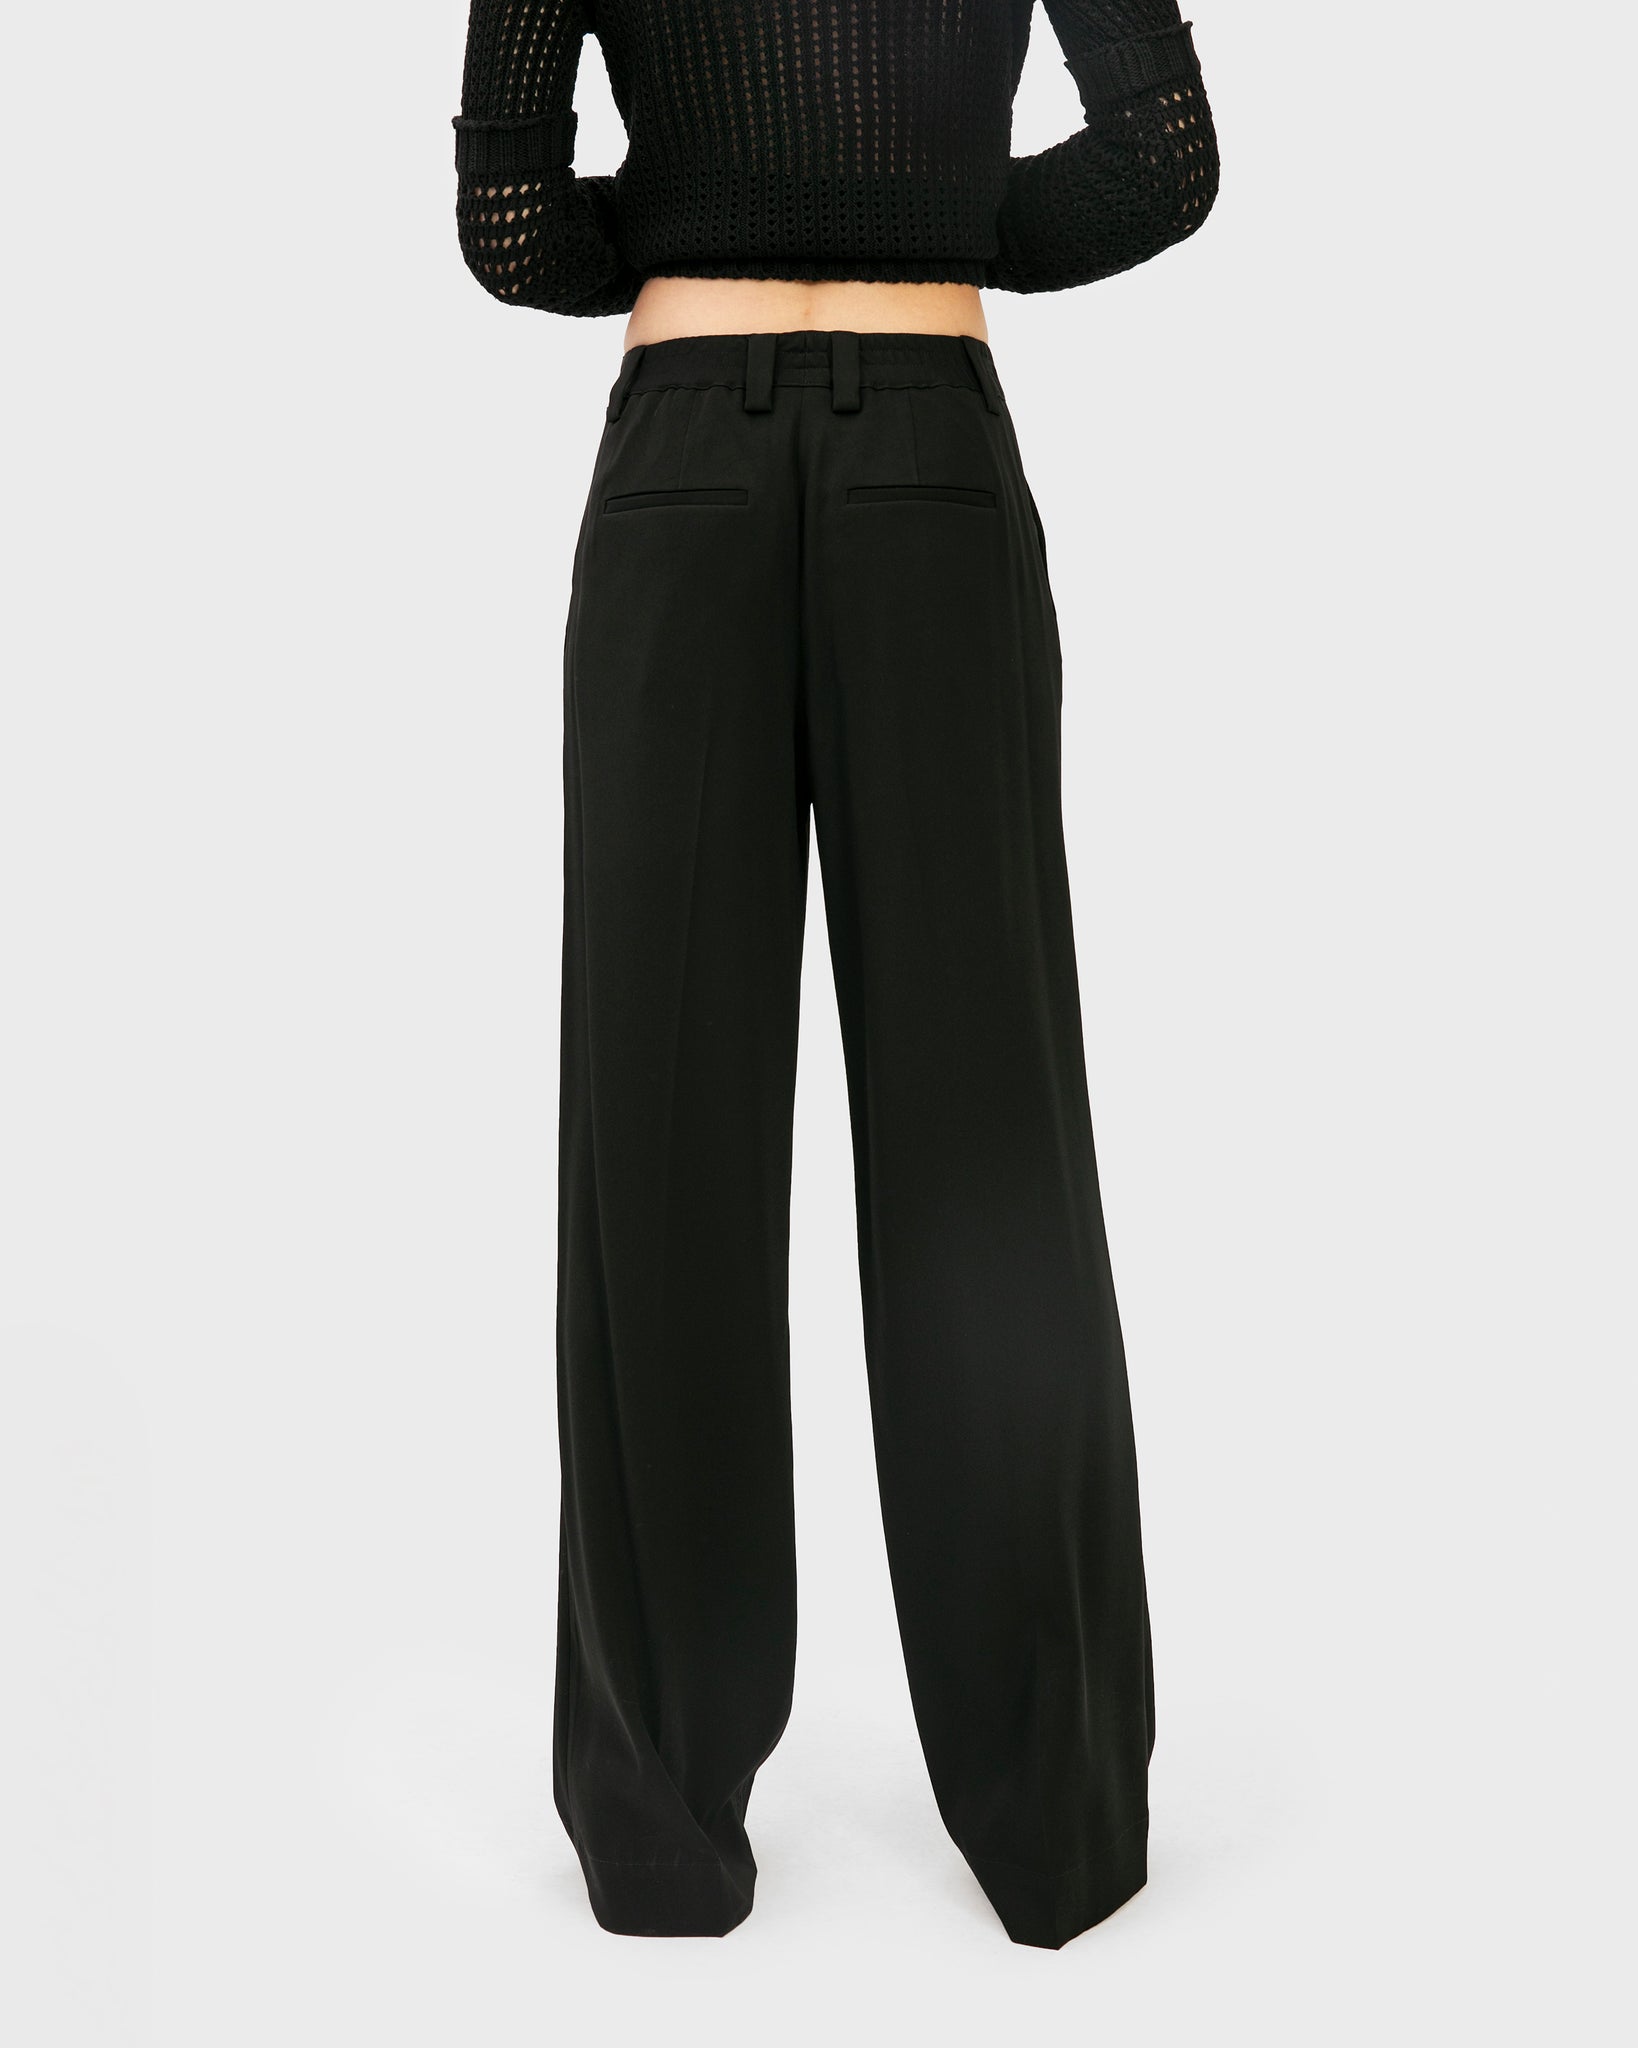 Ladies Women Office Work Trousers Half Elasticated Stretch Waist Pull Up  Pants | eBay